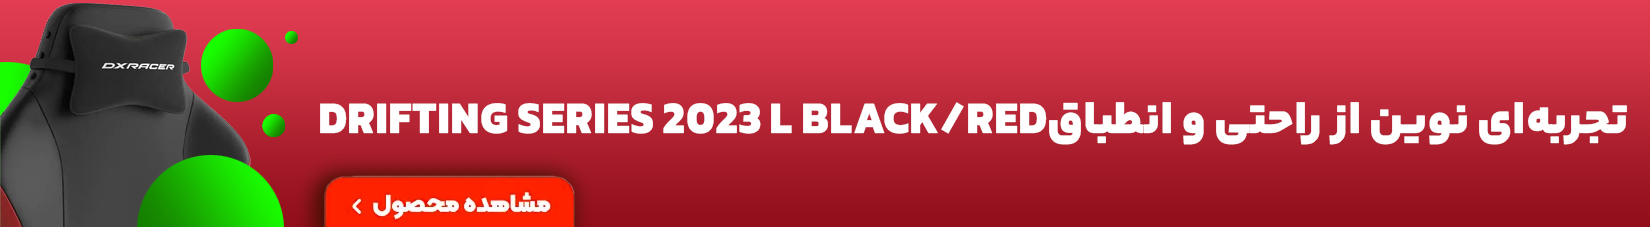 صندلی گیمینگ دی ایکس ریسر دریفتینگ Drifting Series 2023 L Black/RED